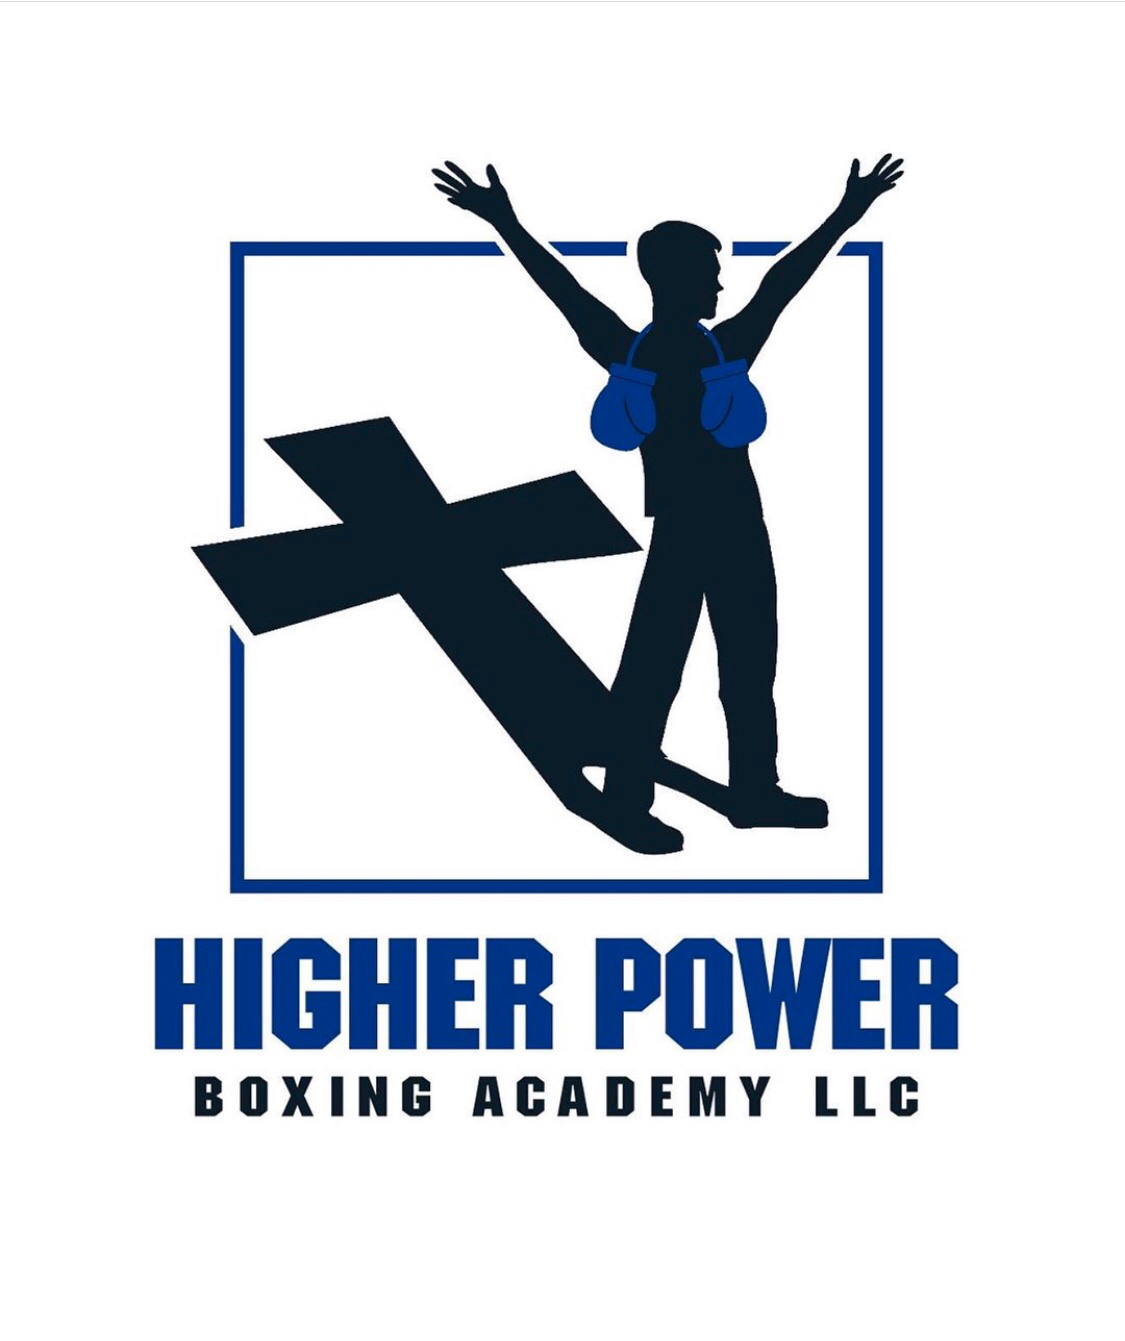 Higher Power Boxing Academy LLC Photo